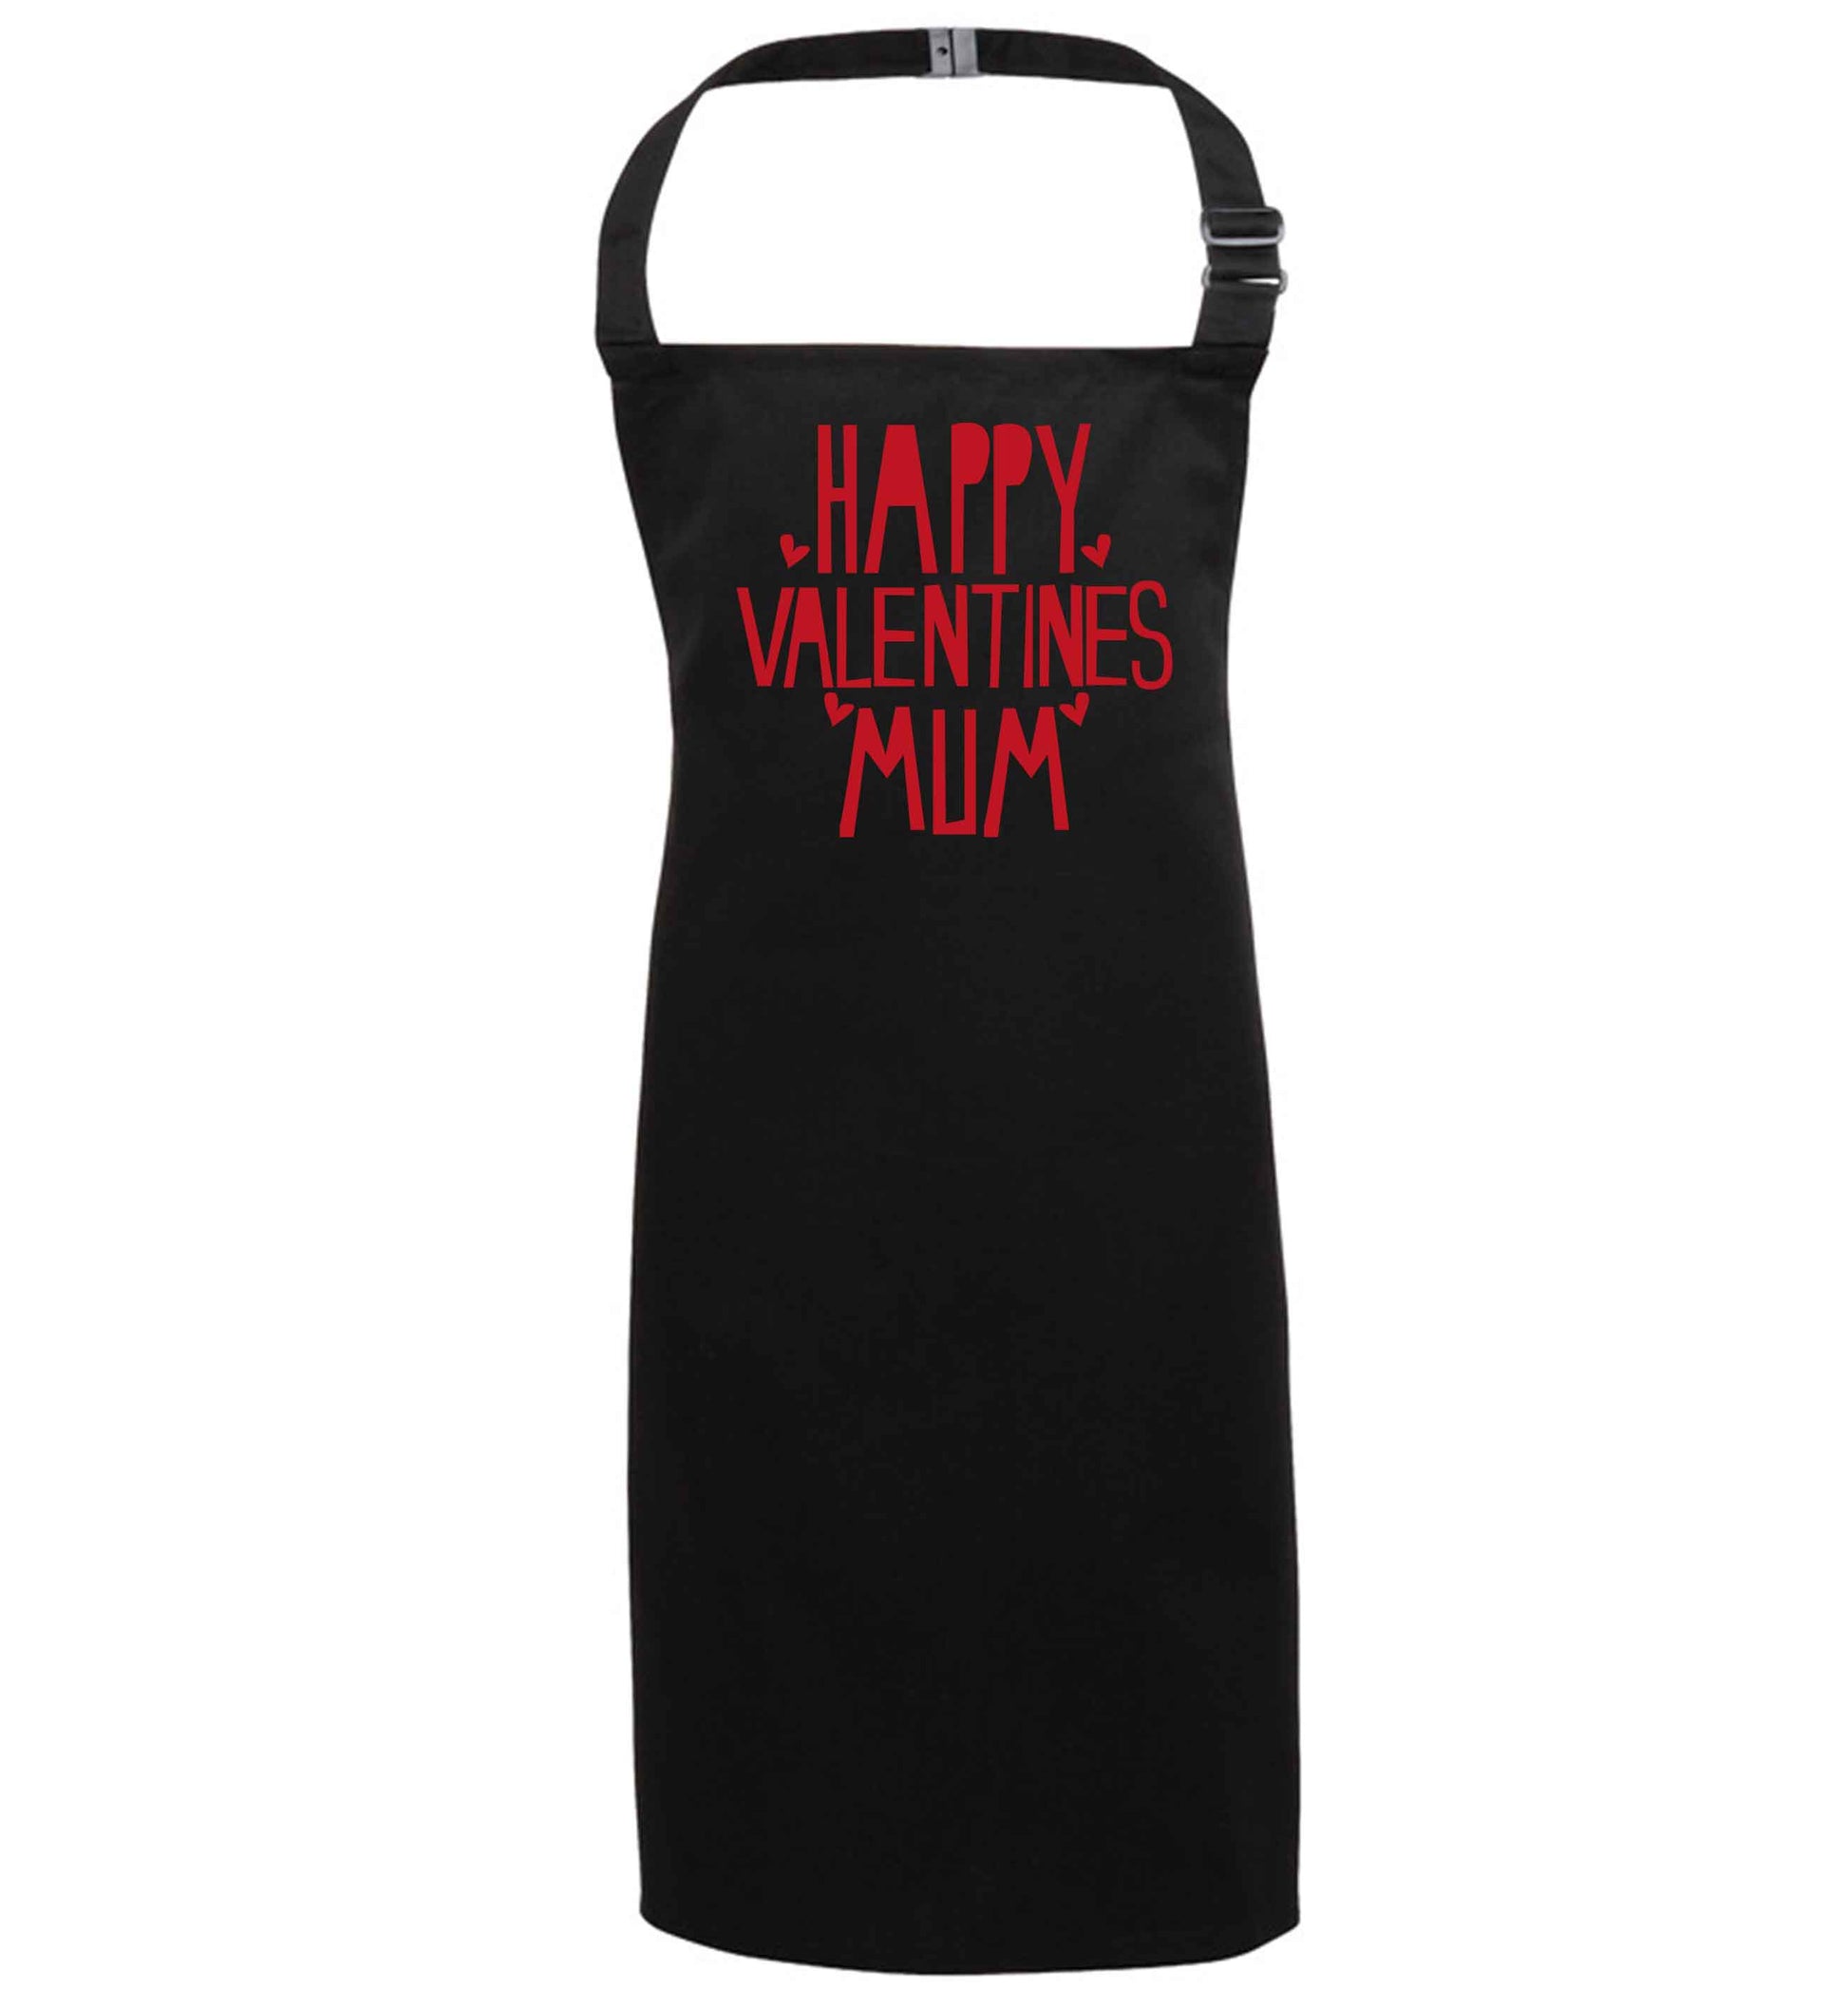 Happy valentines mum black apron 7-10 years